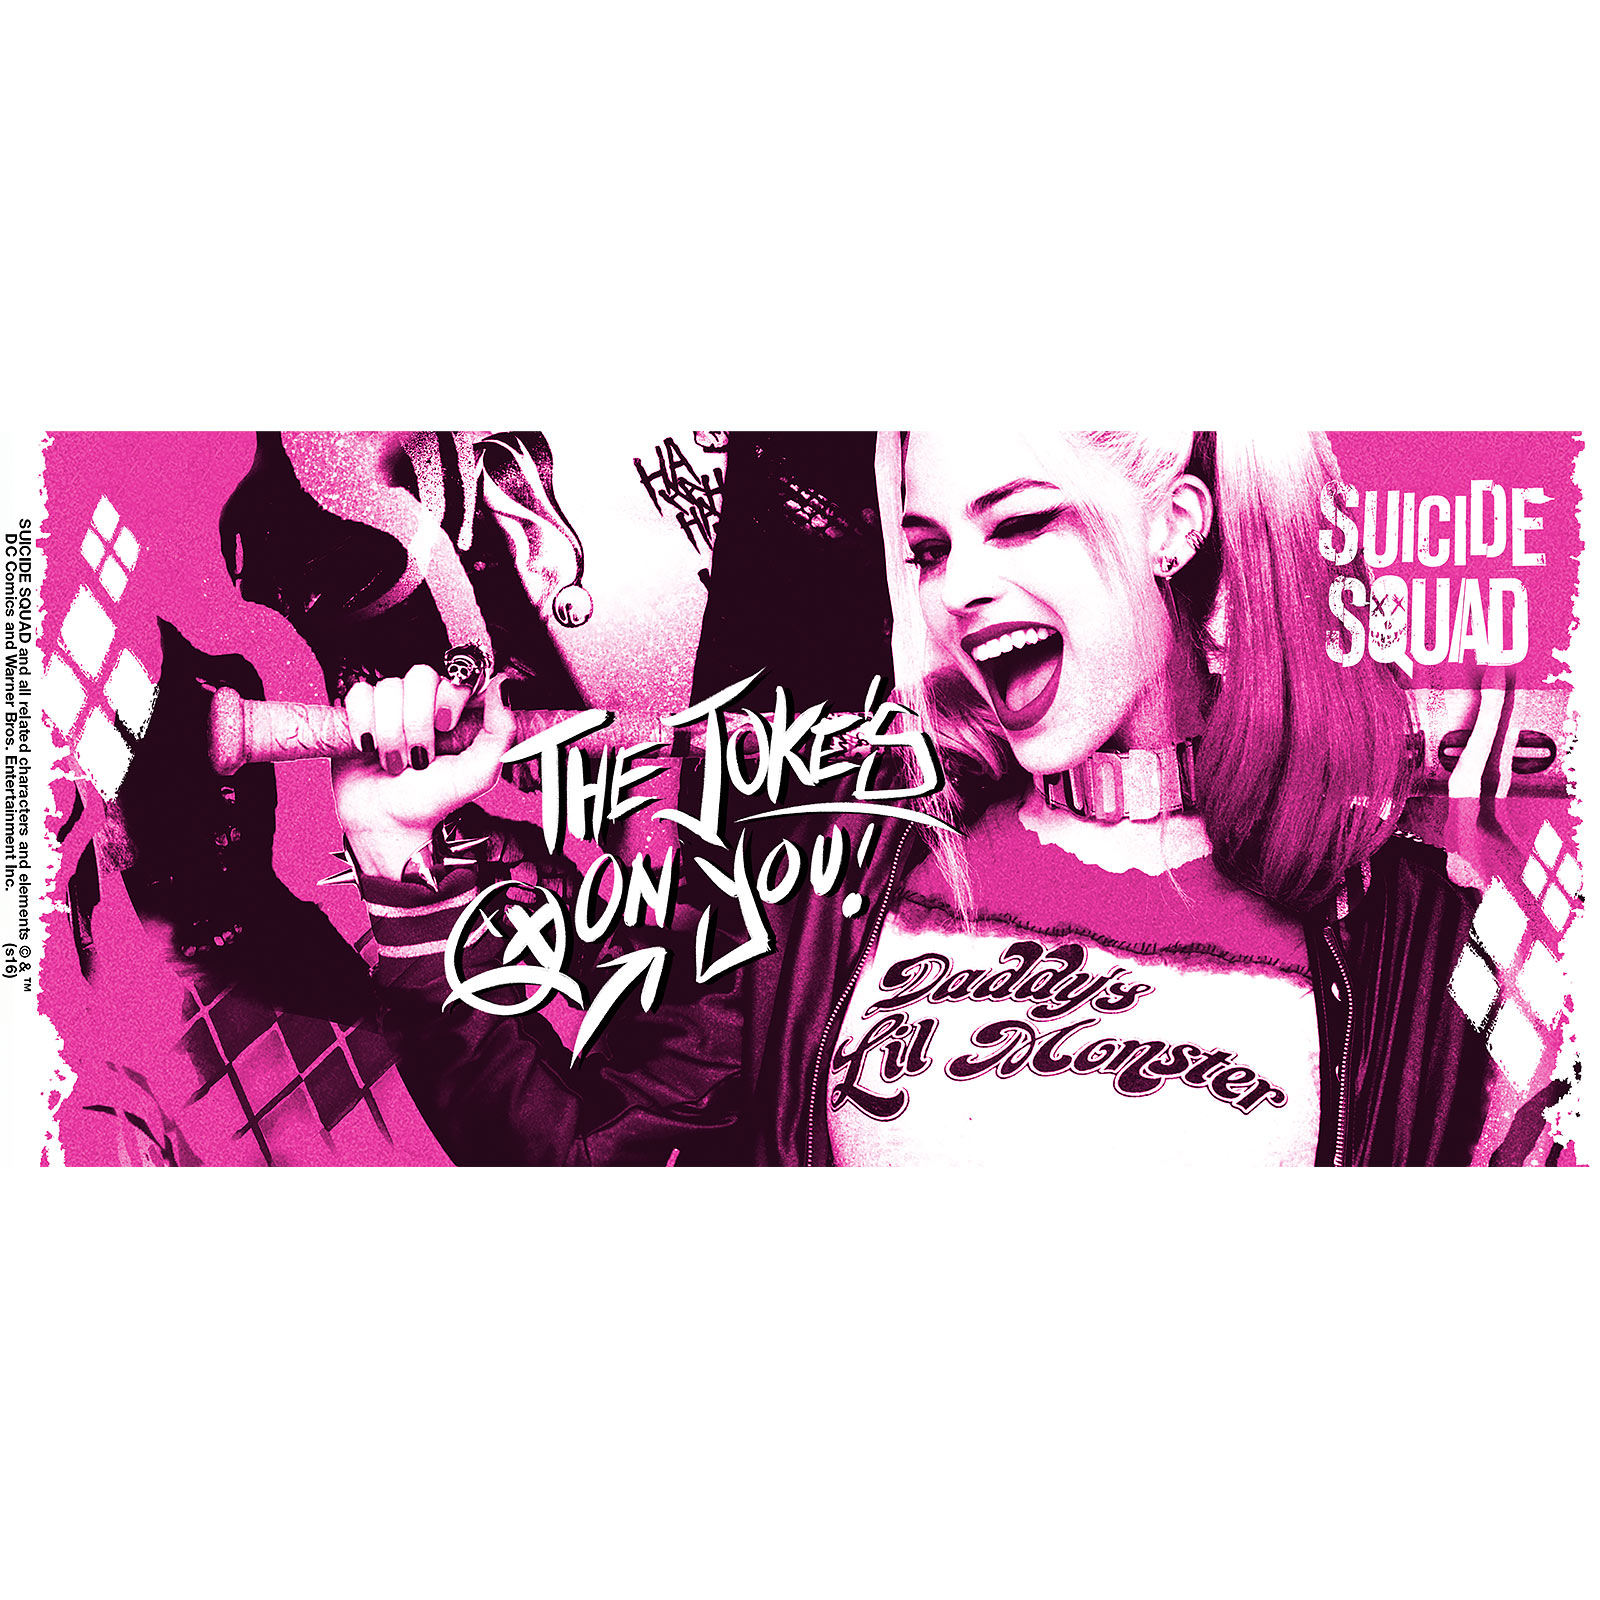 Suicide Squad - Harley Quinn Girl Power Tasse pink